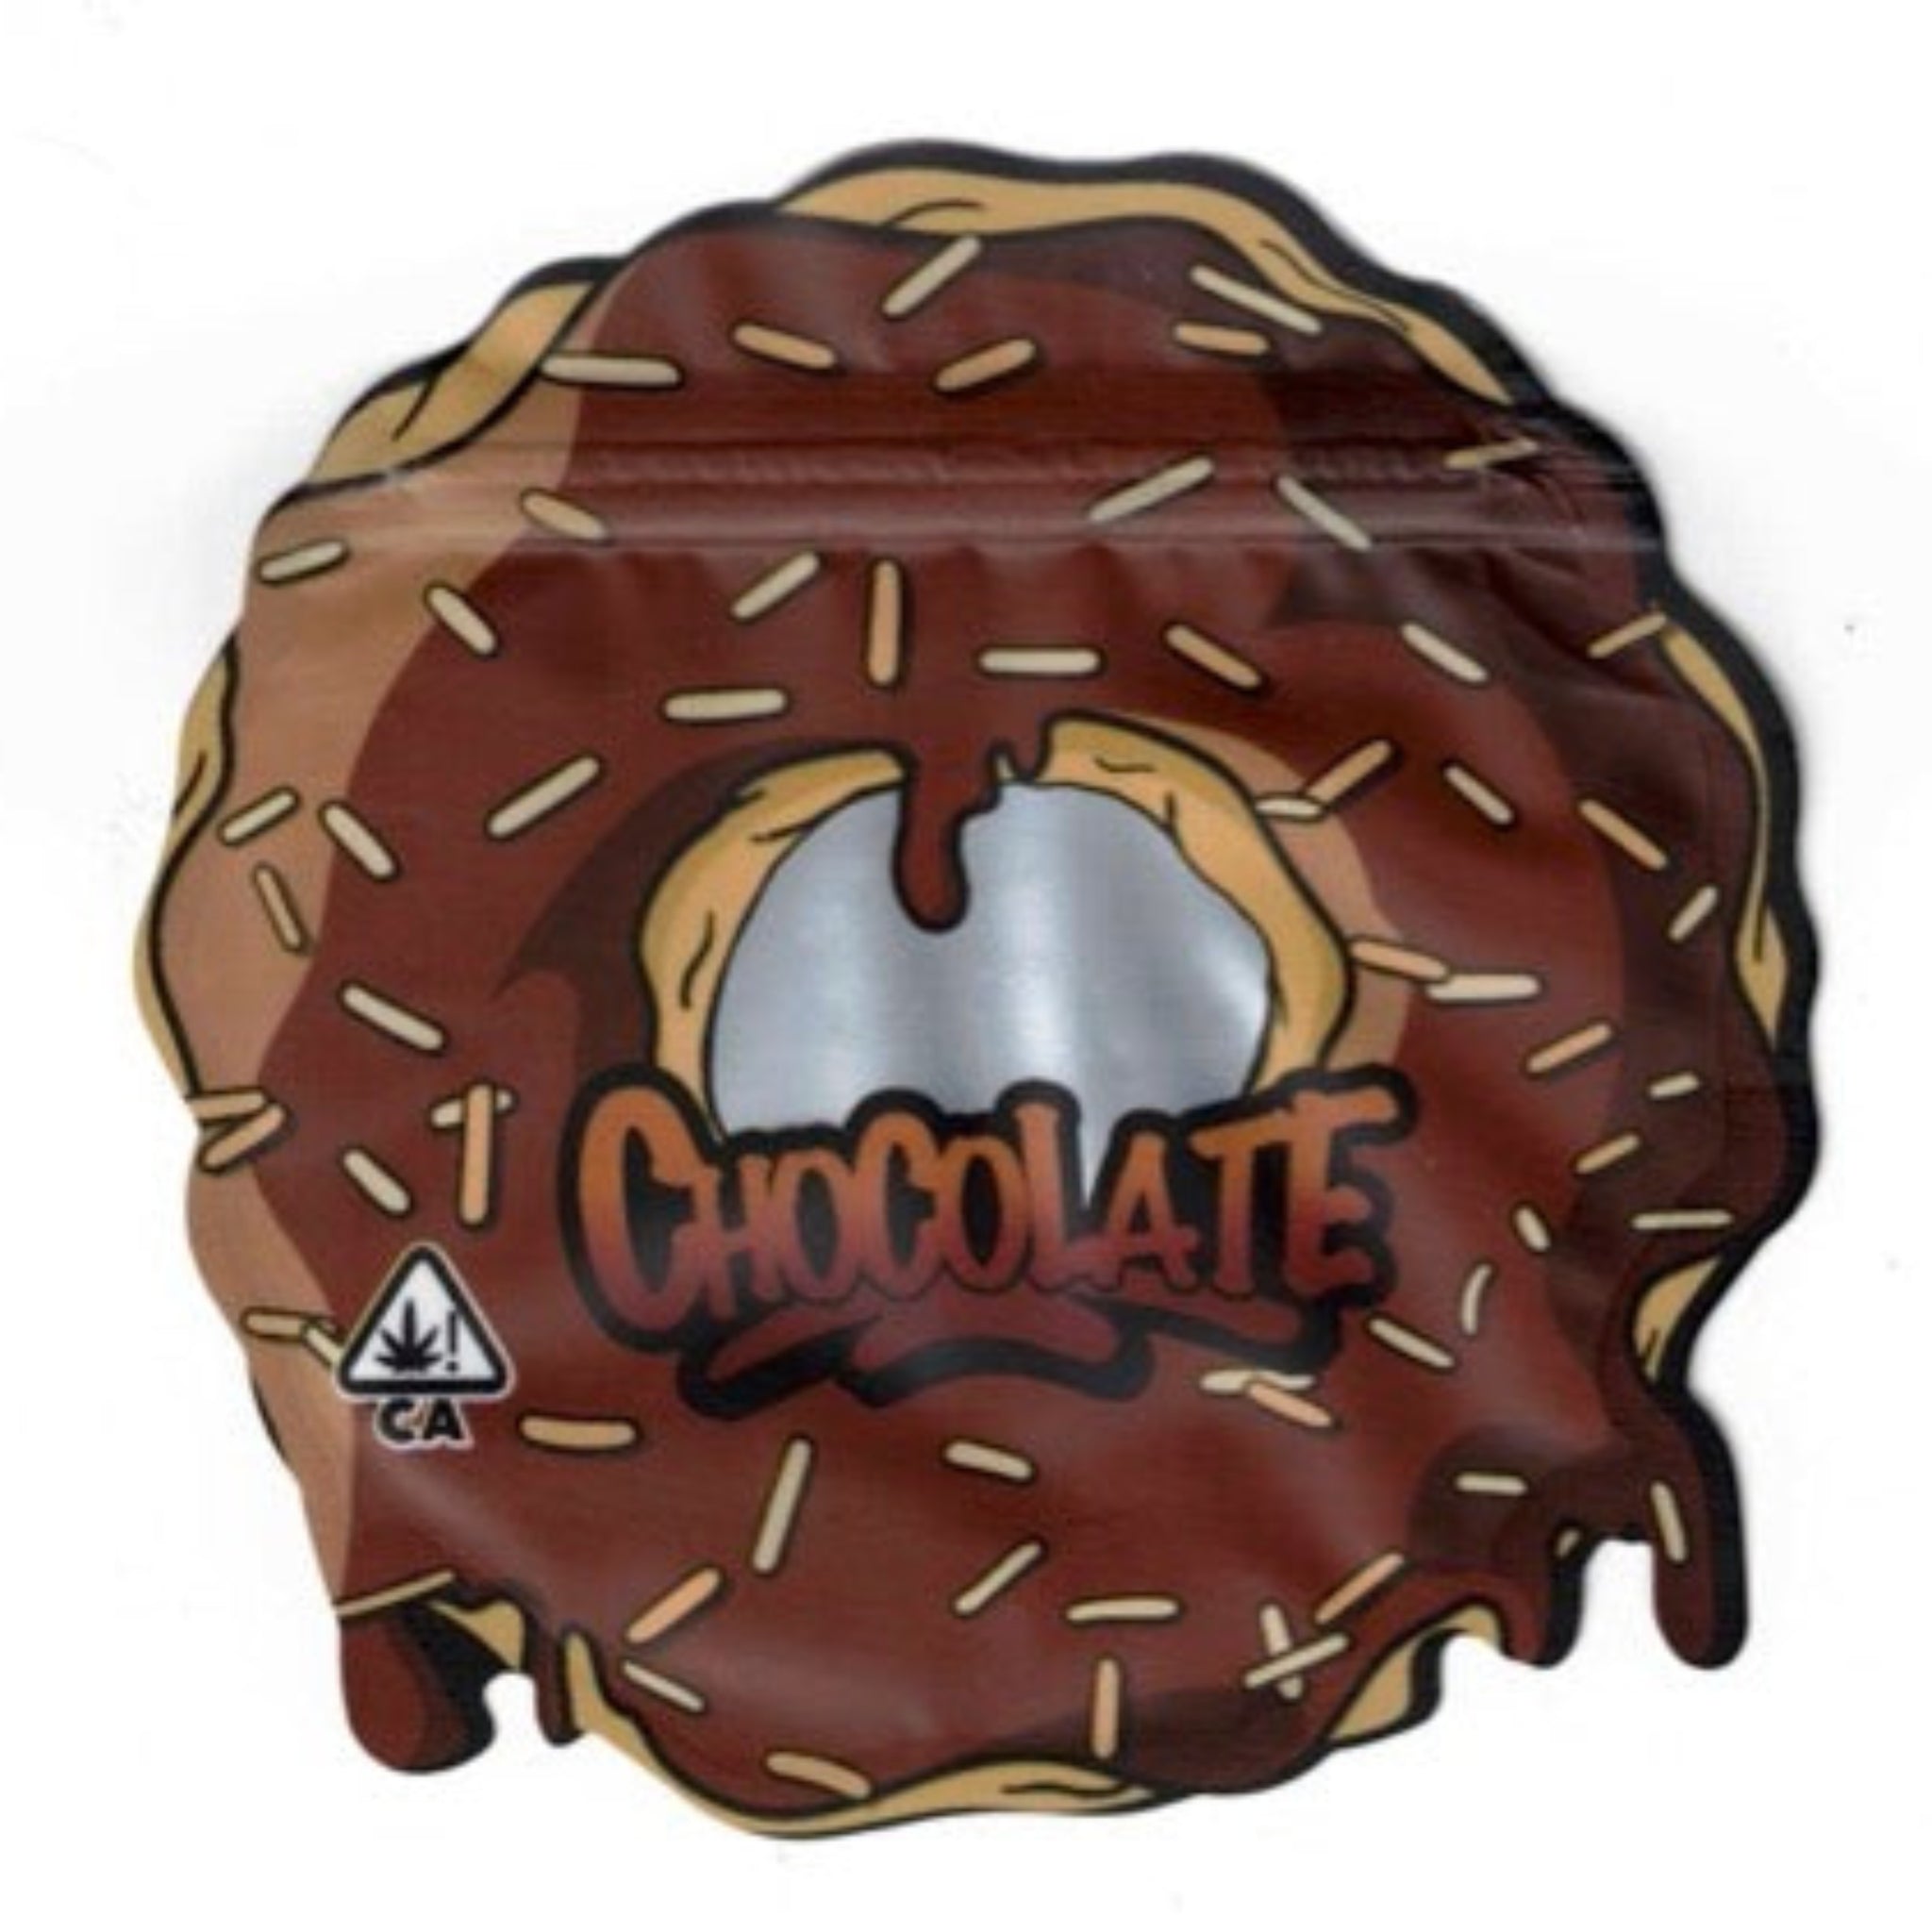 Chocolate Donut Cutout 3.5G Mylar Bags | Mylar Bag Food Storage